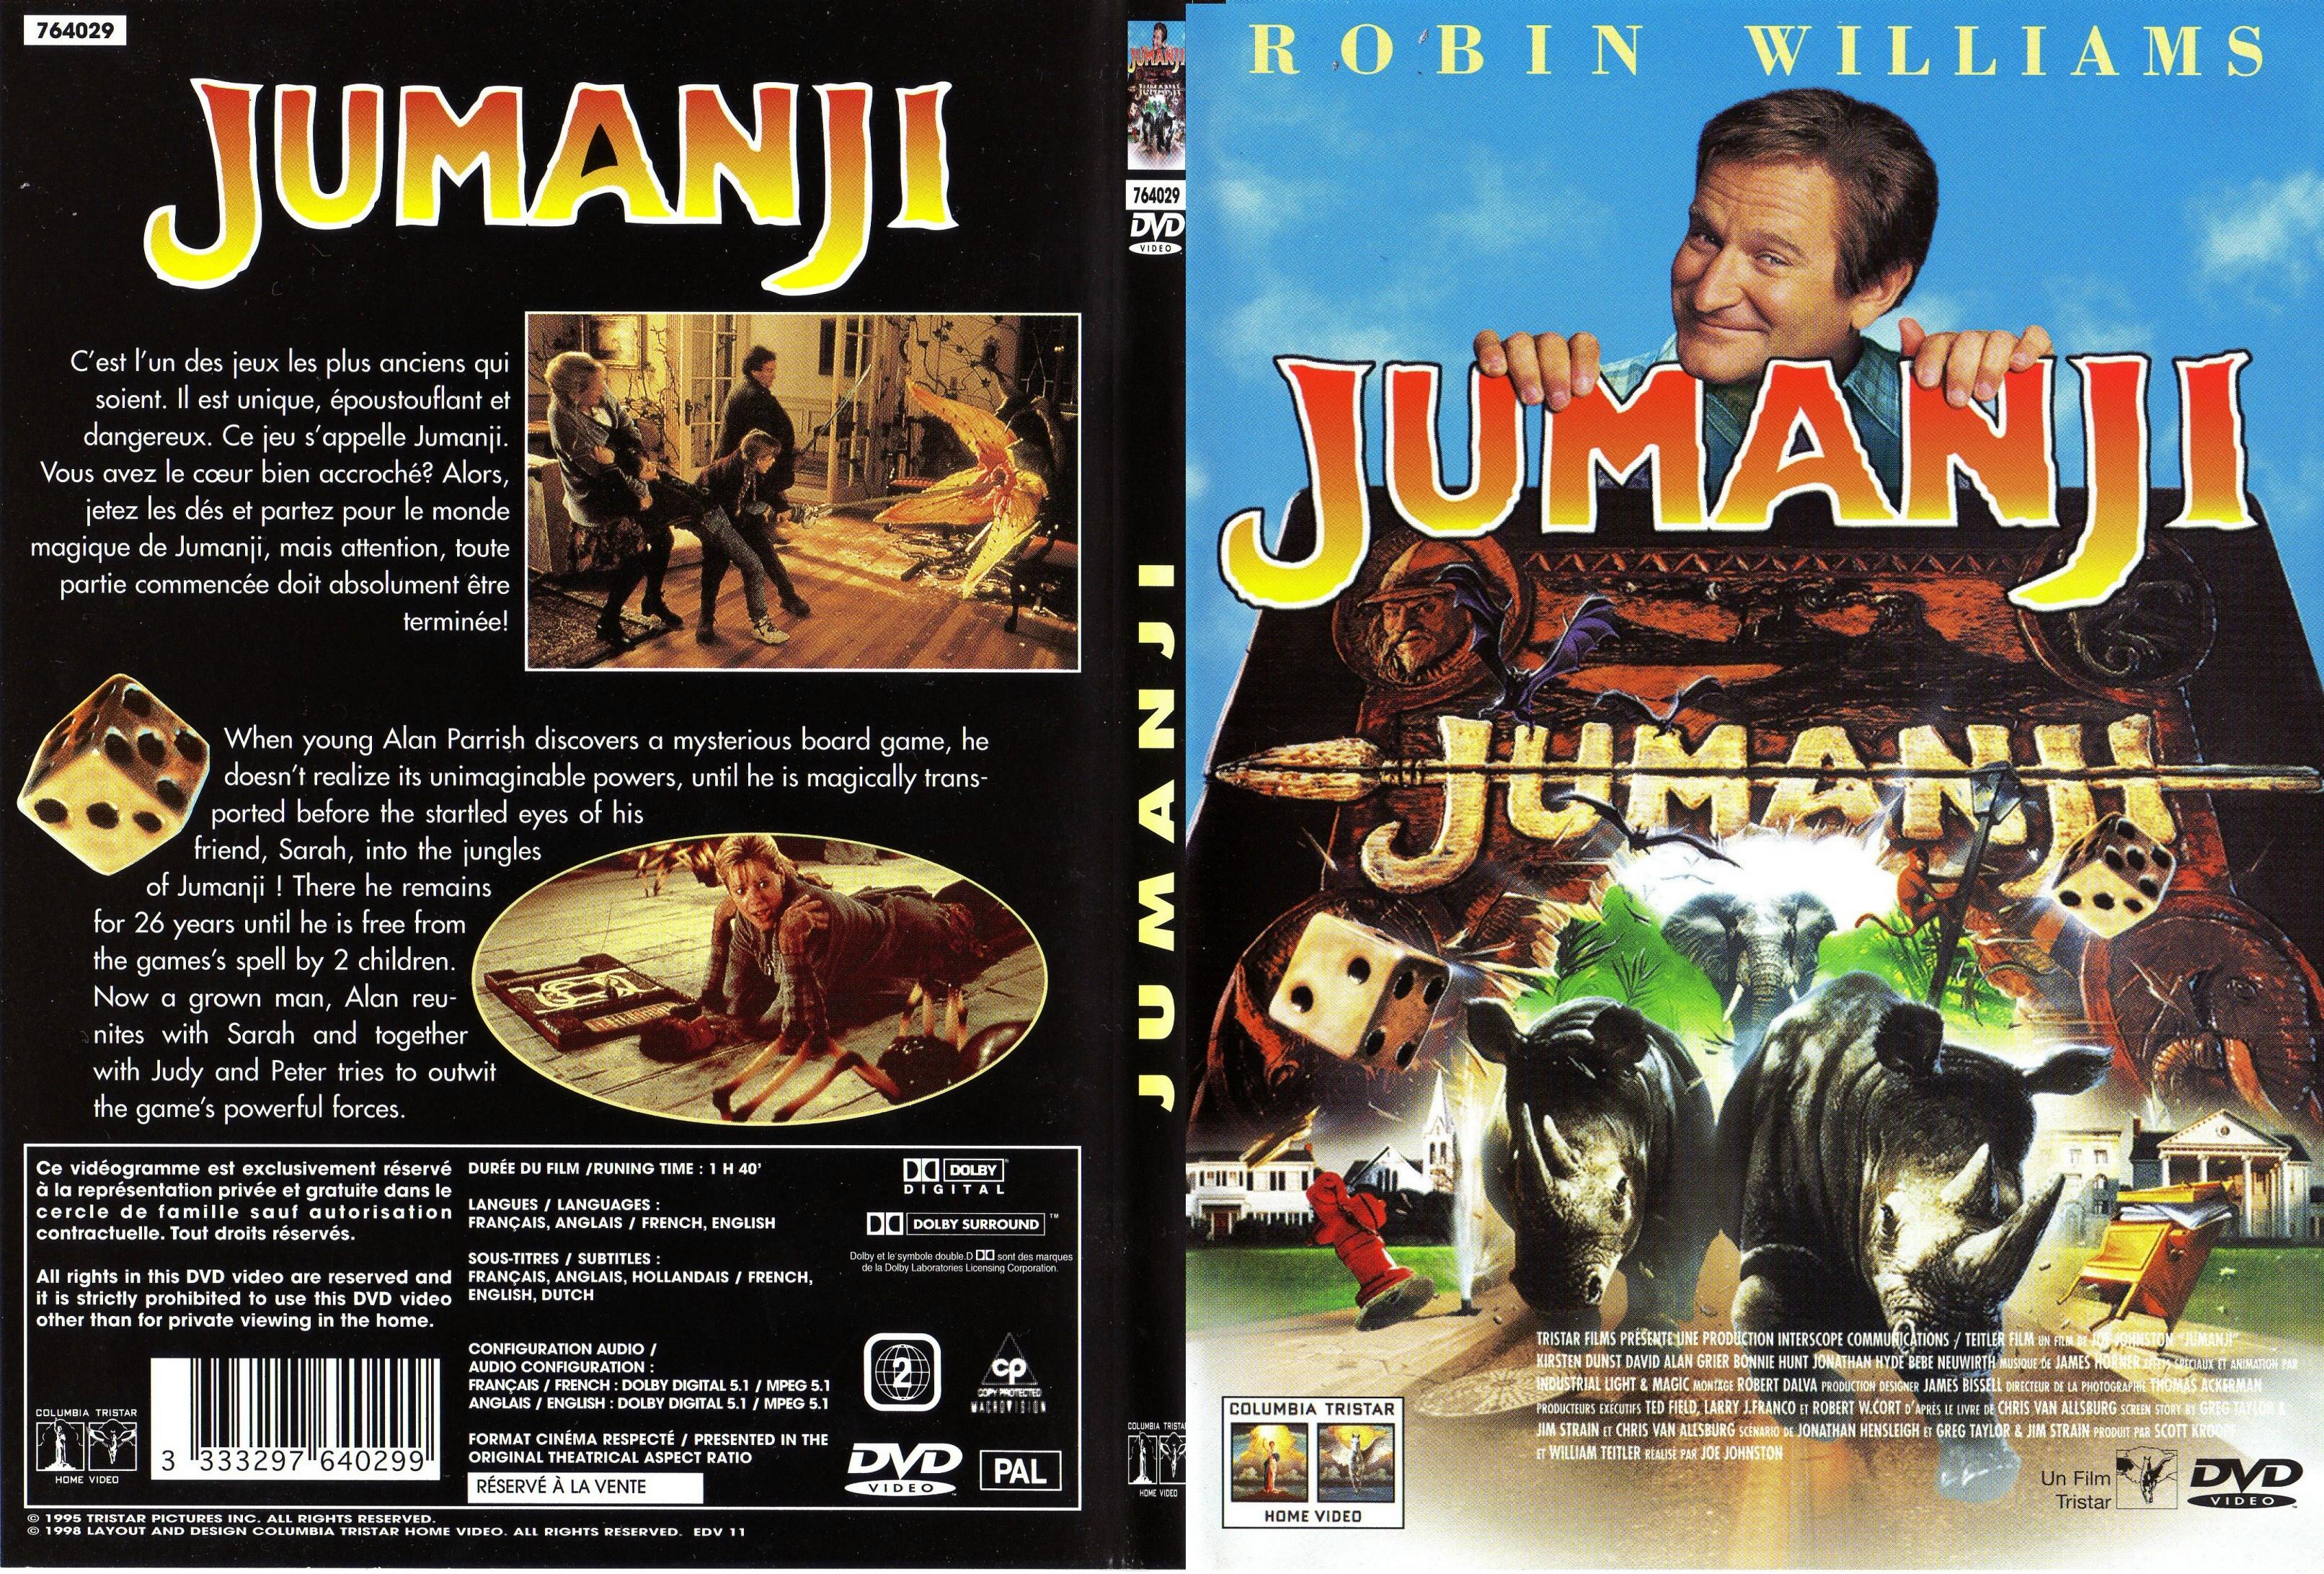 Jaquette DVD Jumanji - SLIM